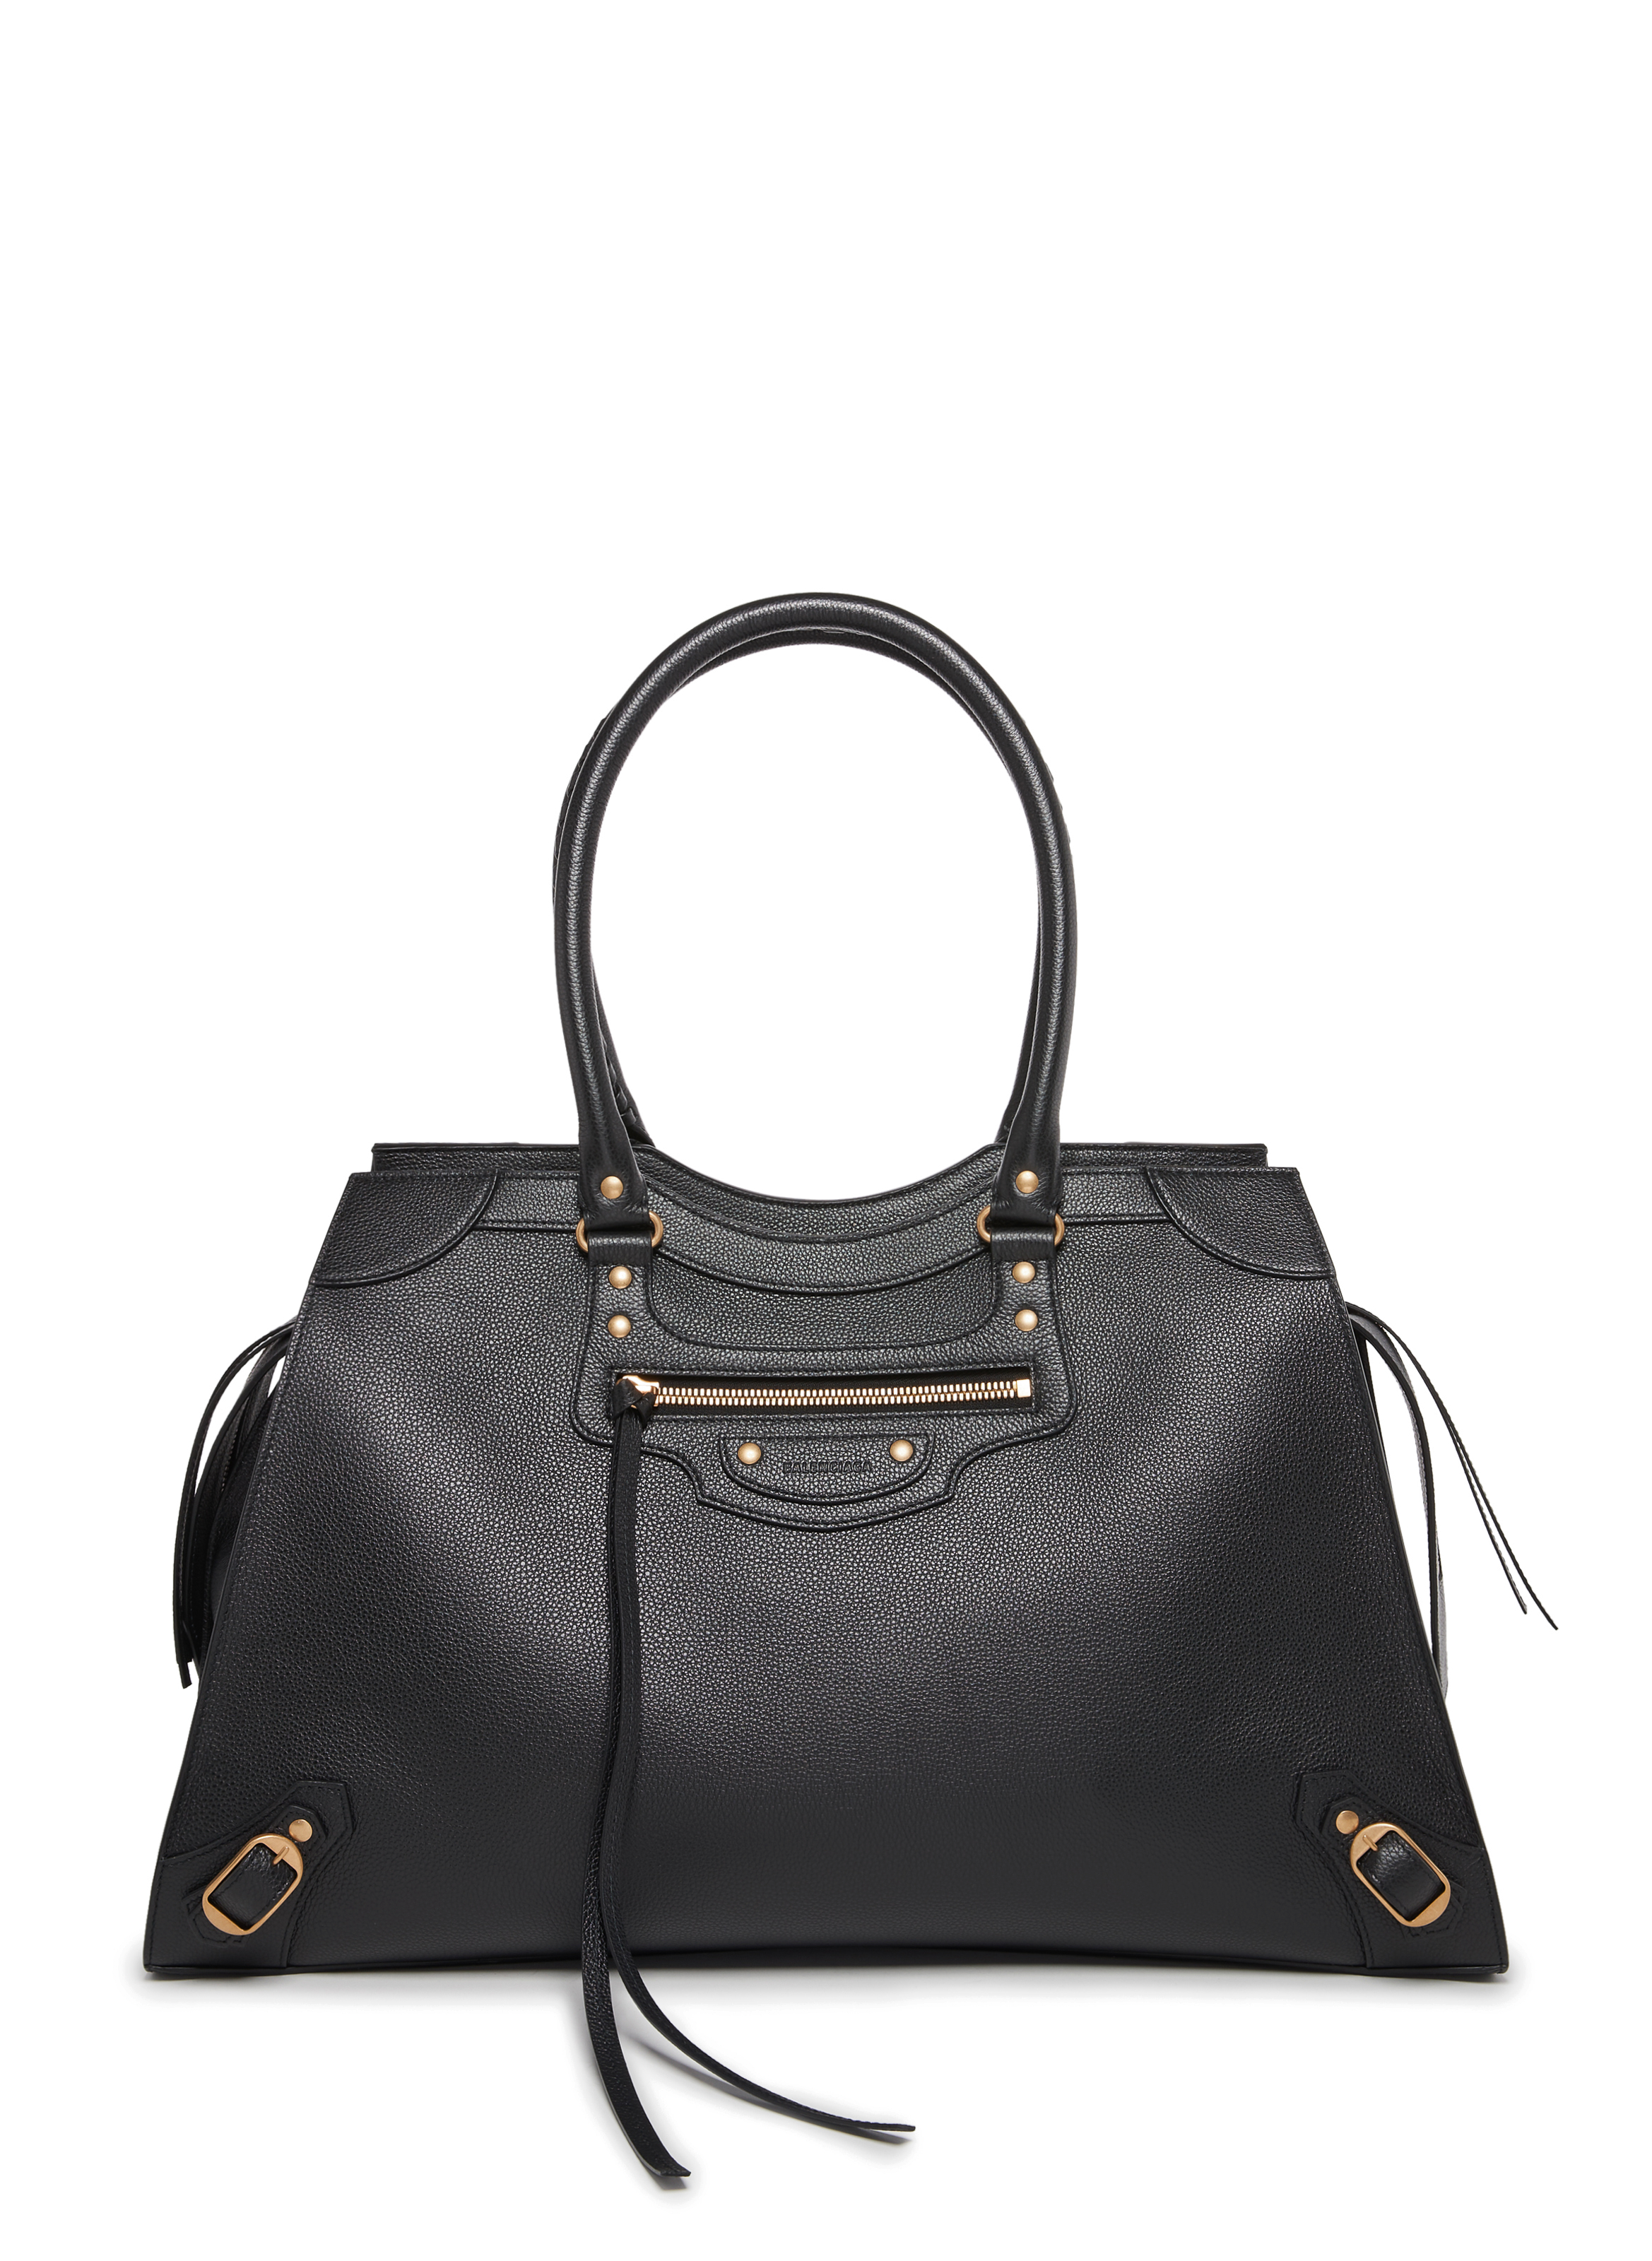 Balenciaga City Leather Large Bags  Handbags for Women for sale  eBay